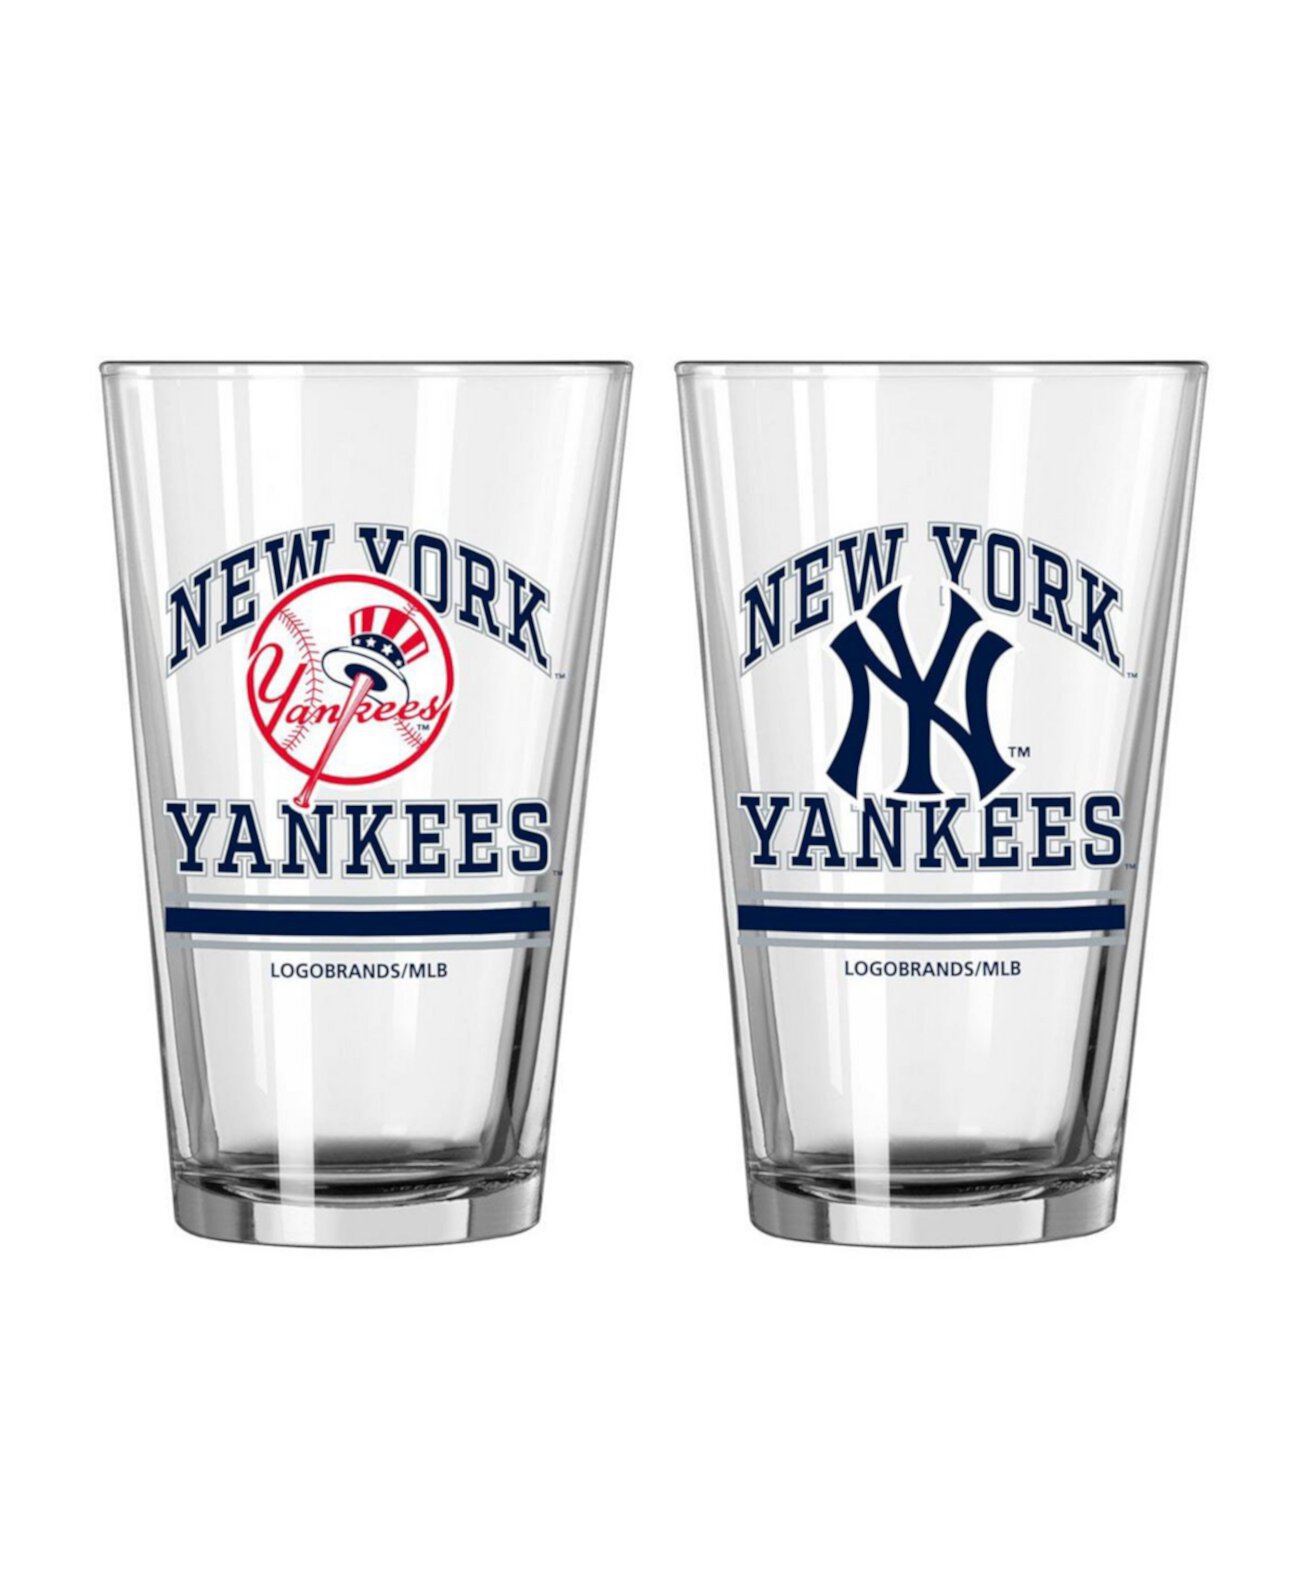 New York Yankees 16 унций, пинта, две упаковки стаканов Logo Brand